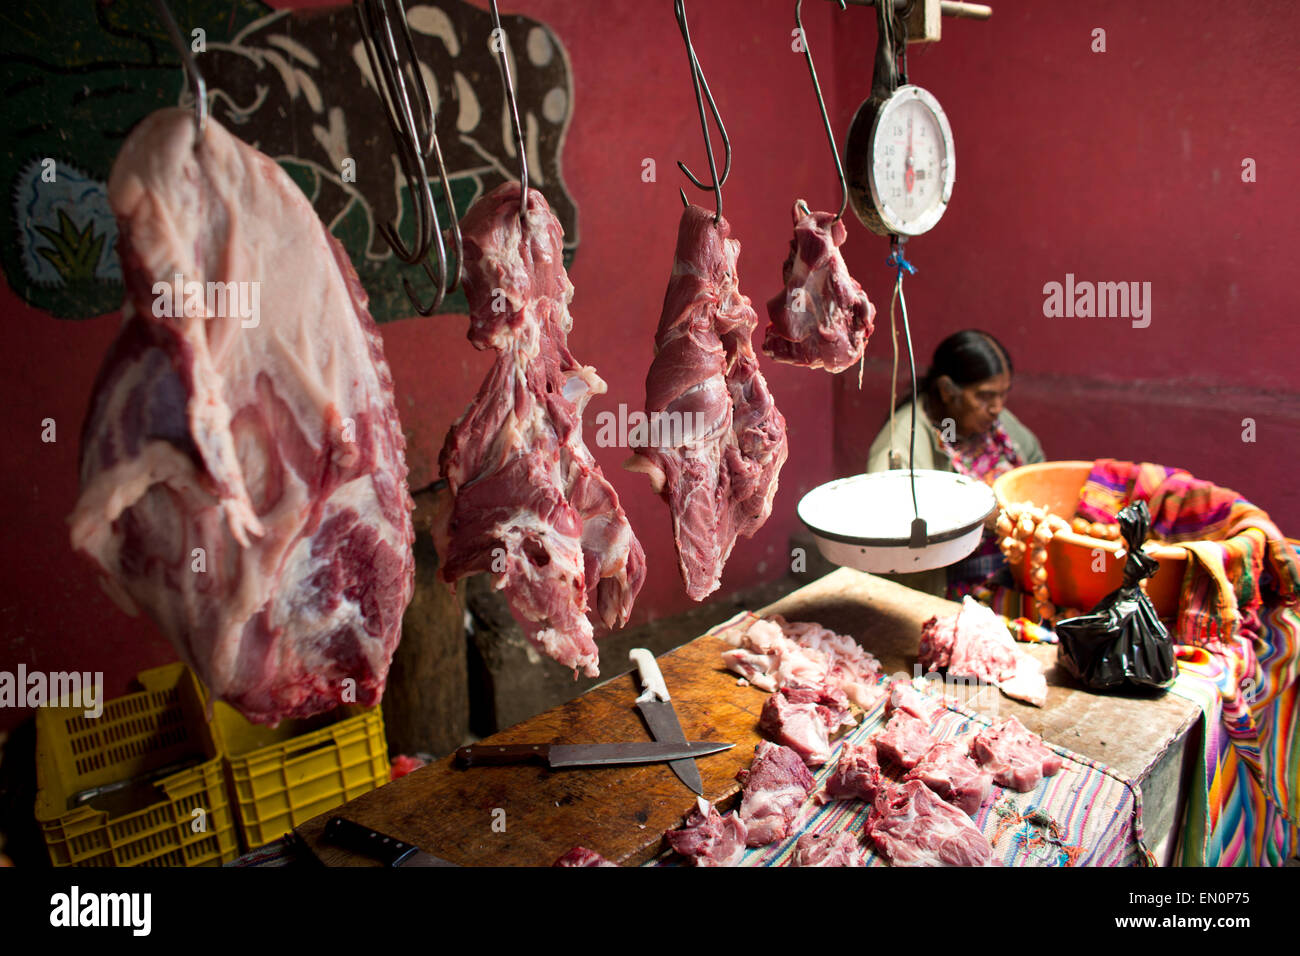 butcher shop in Guatemala city Stock Photo